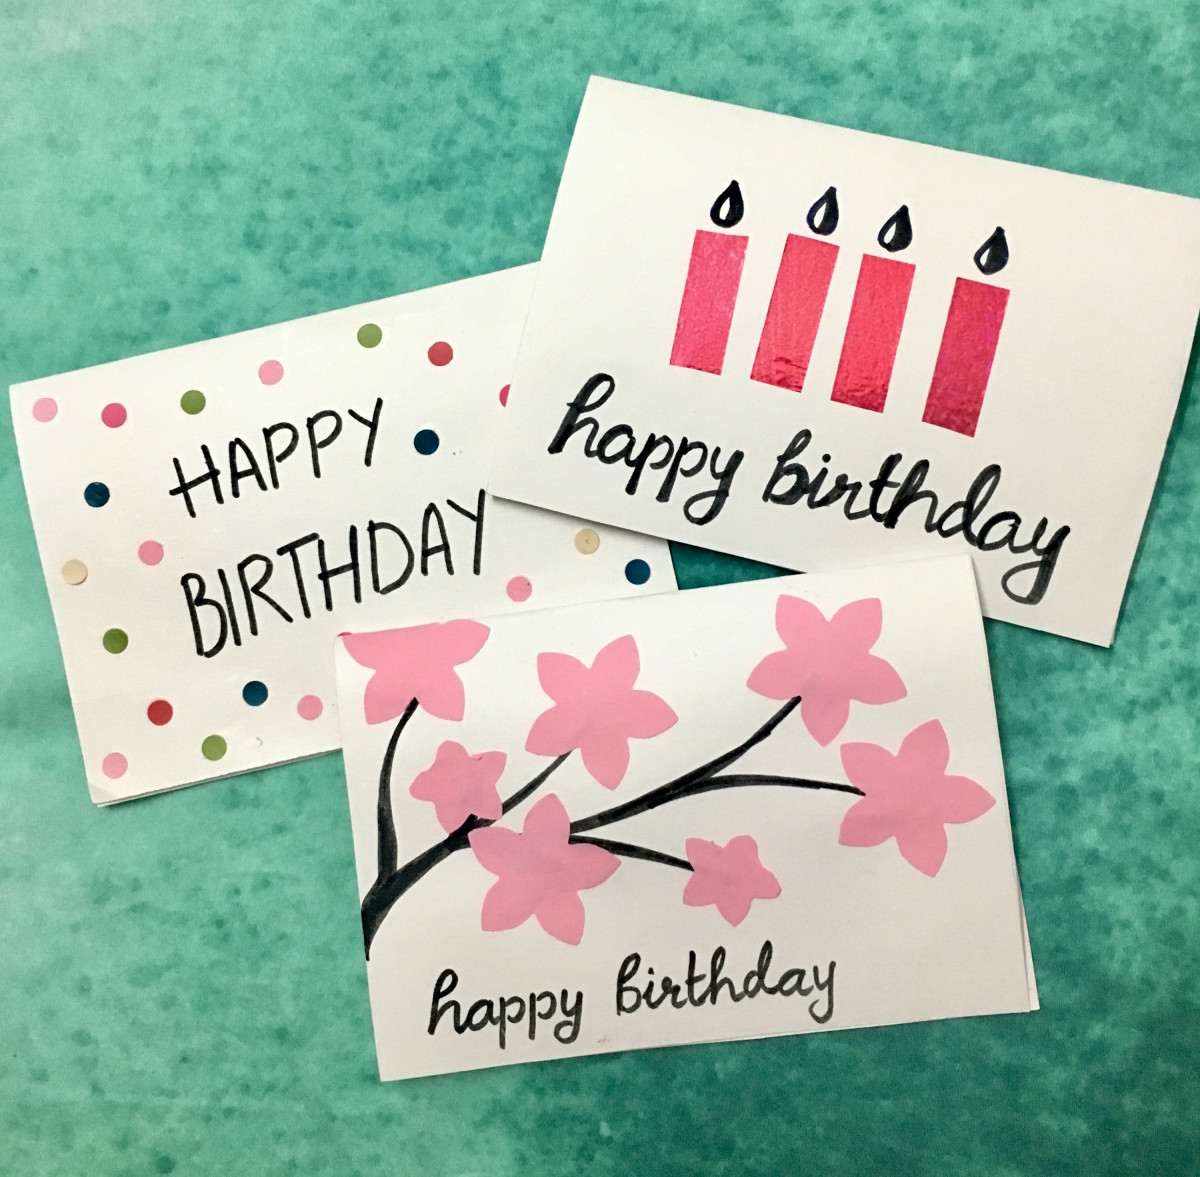 3 easy 5 minute diy birthday greeting cards holidappy - 10 simple diy ...